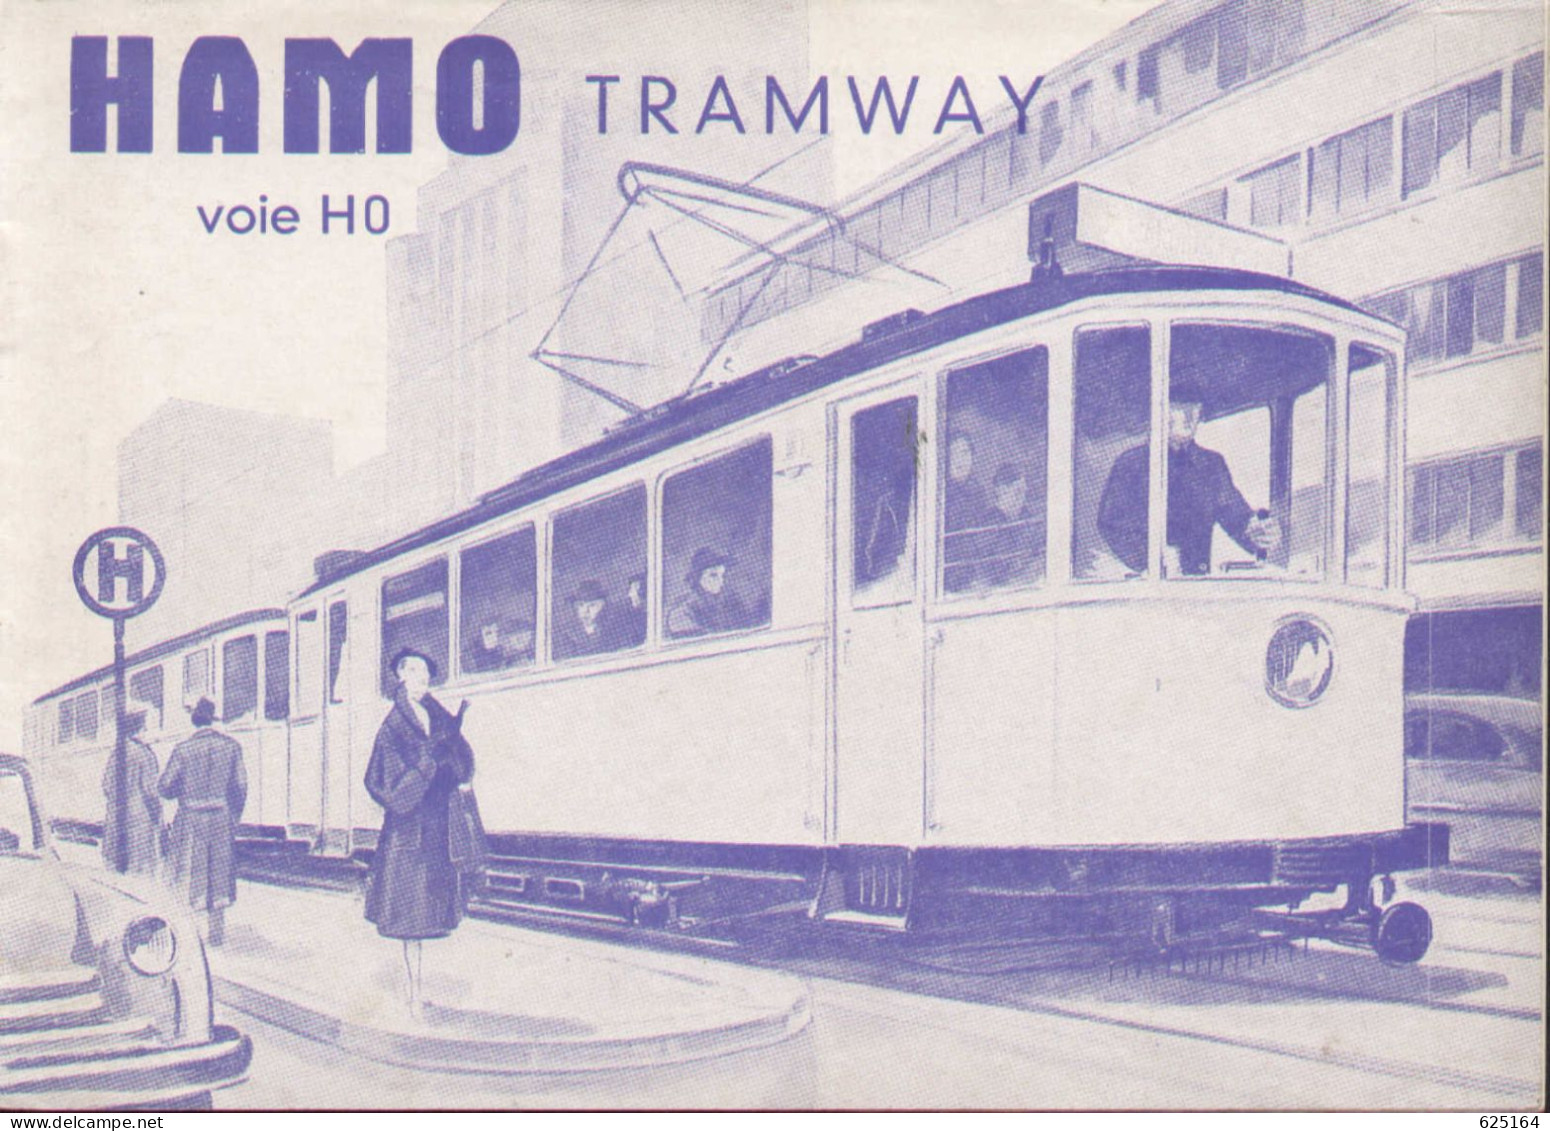 Catalogue HAMO TRAMWAY 1954 Voie HO 1:87 Französische Ausgabe - Français